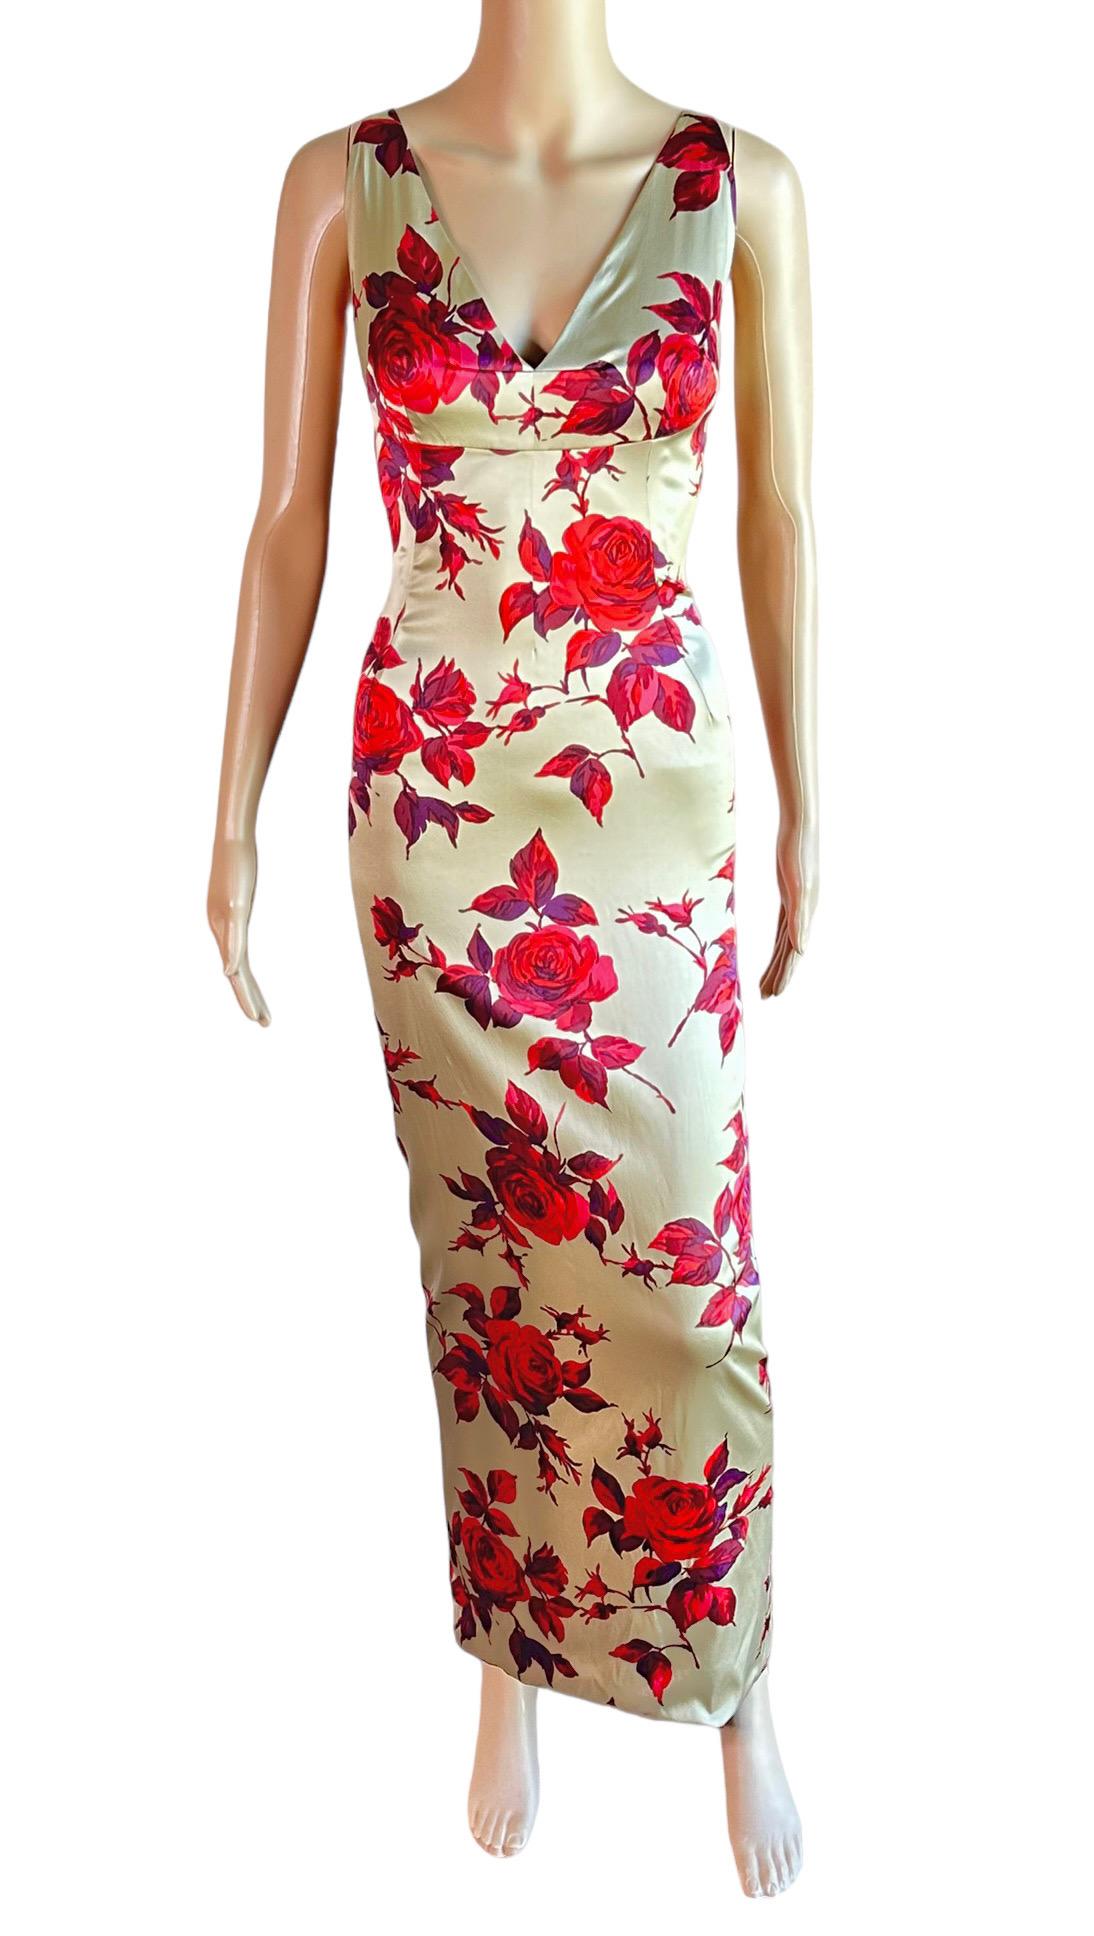 Dolce & Gabbana 1990's Vintage Unworn Silk Floral Rose Print Evening Dress Gown For Sale 2